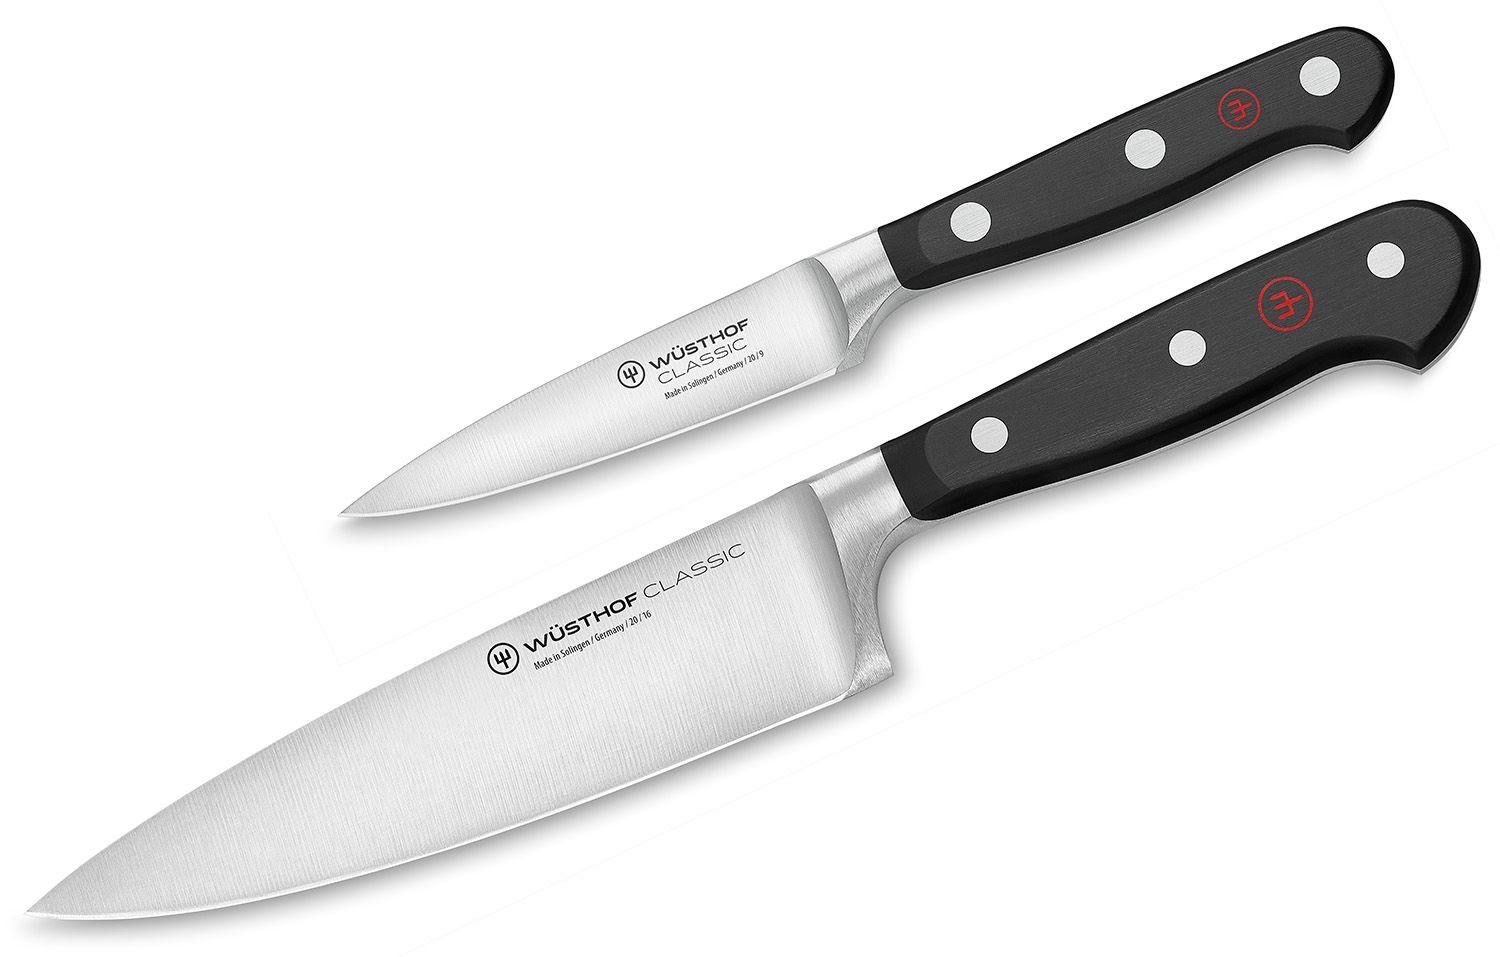 https://pics.knifecenter.com/knifecenter/wusthof-cutlery/images/WU1120160211_1a.jpg